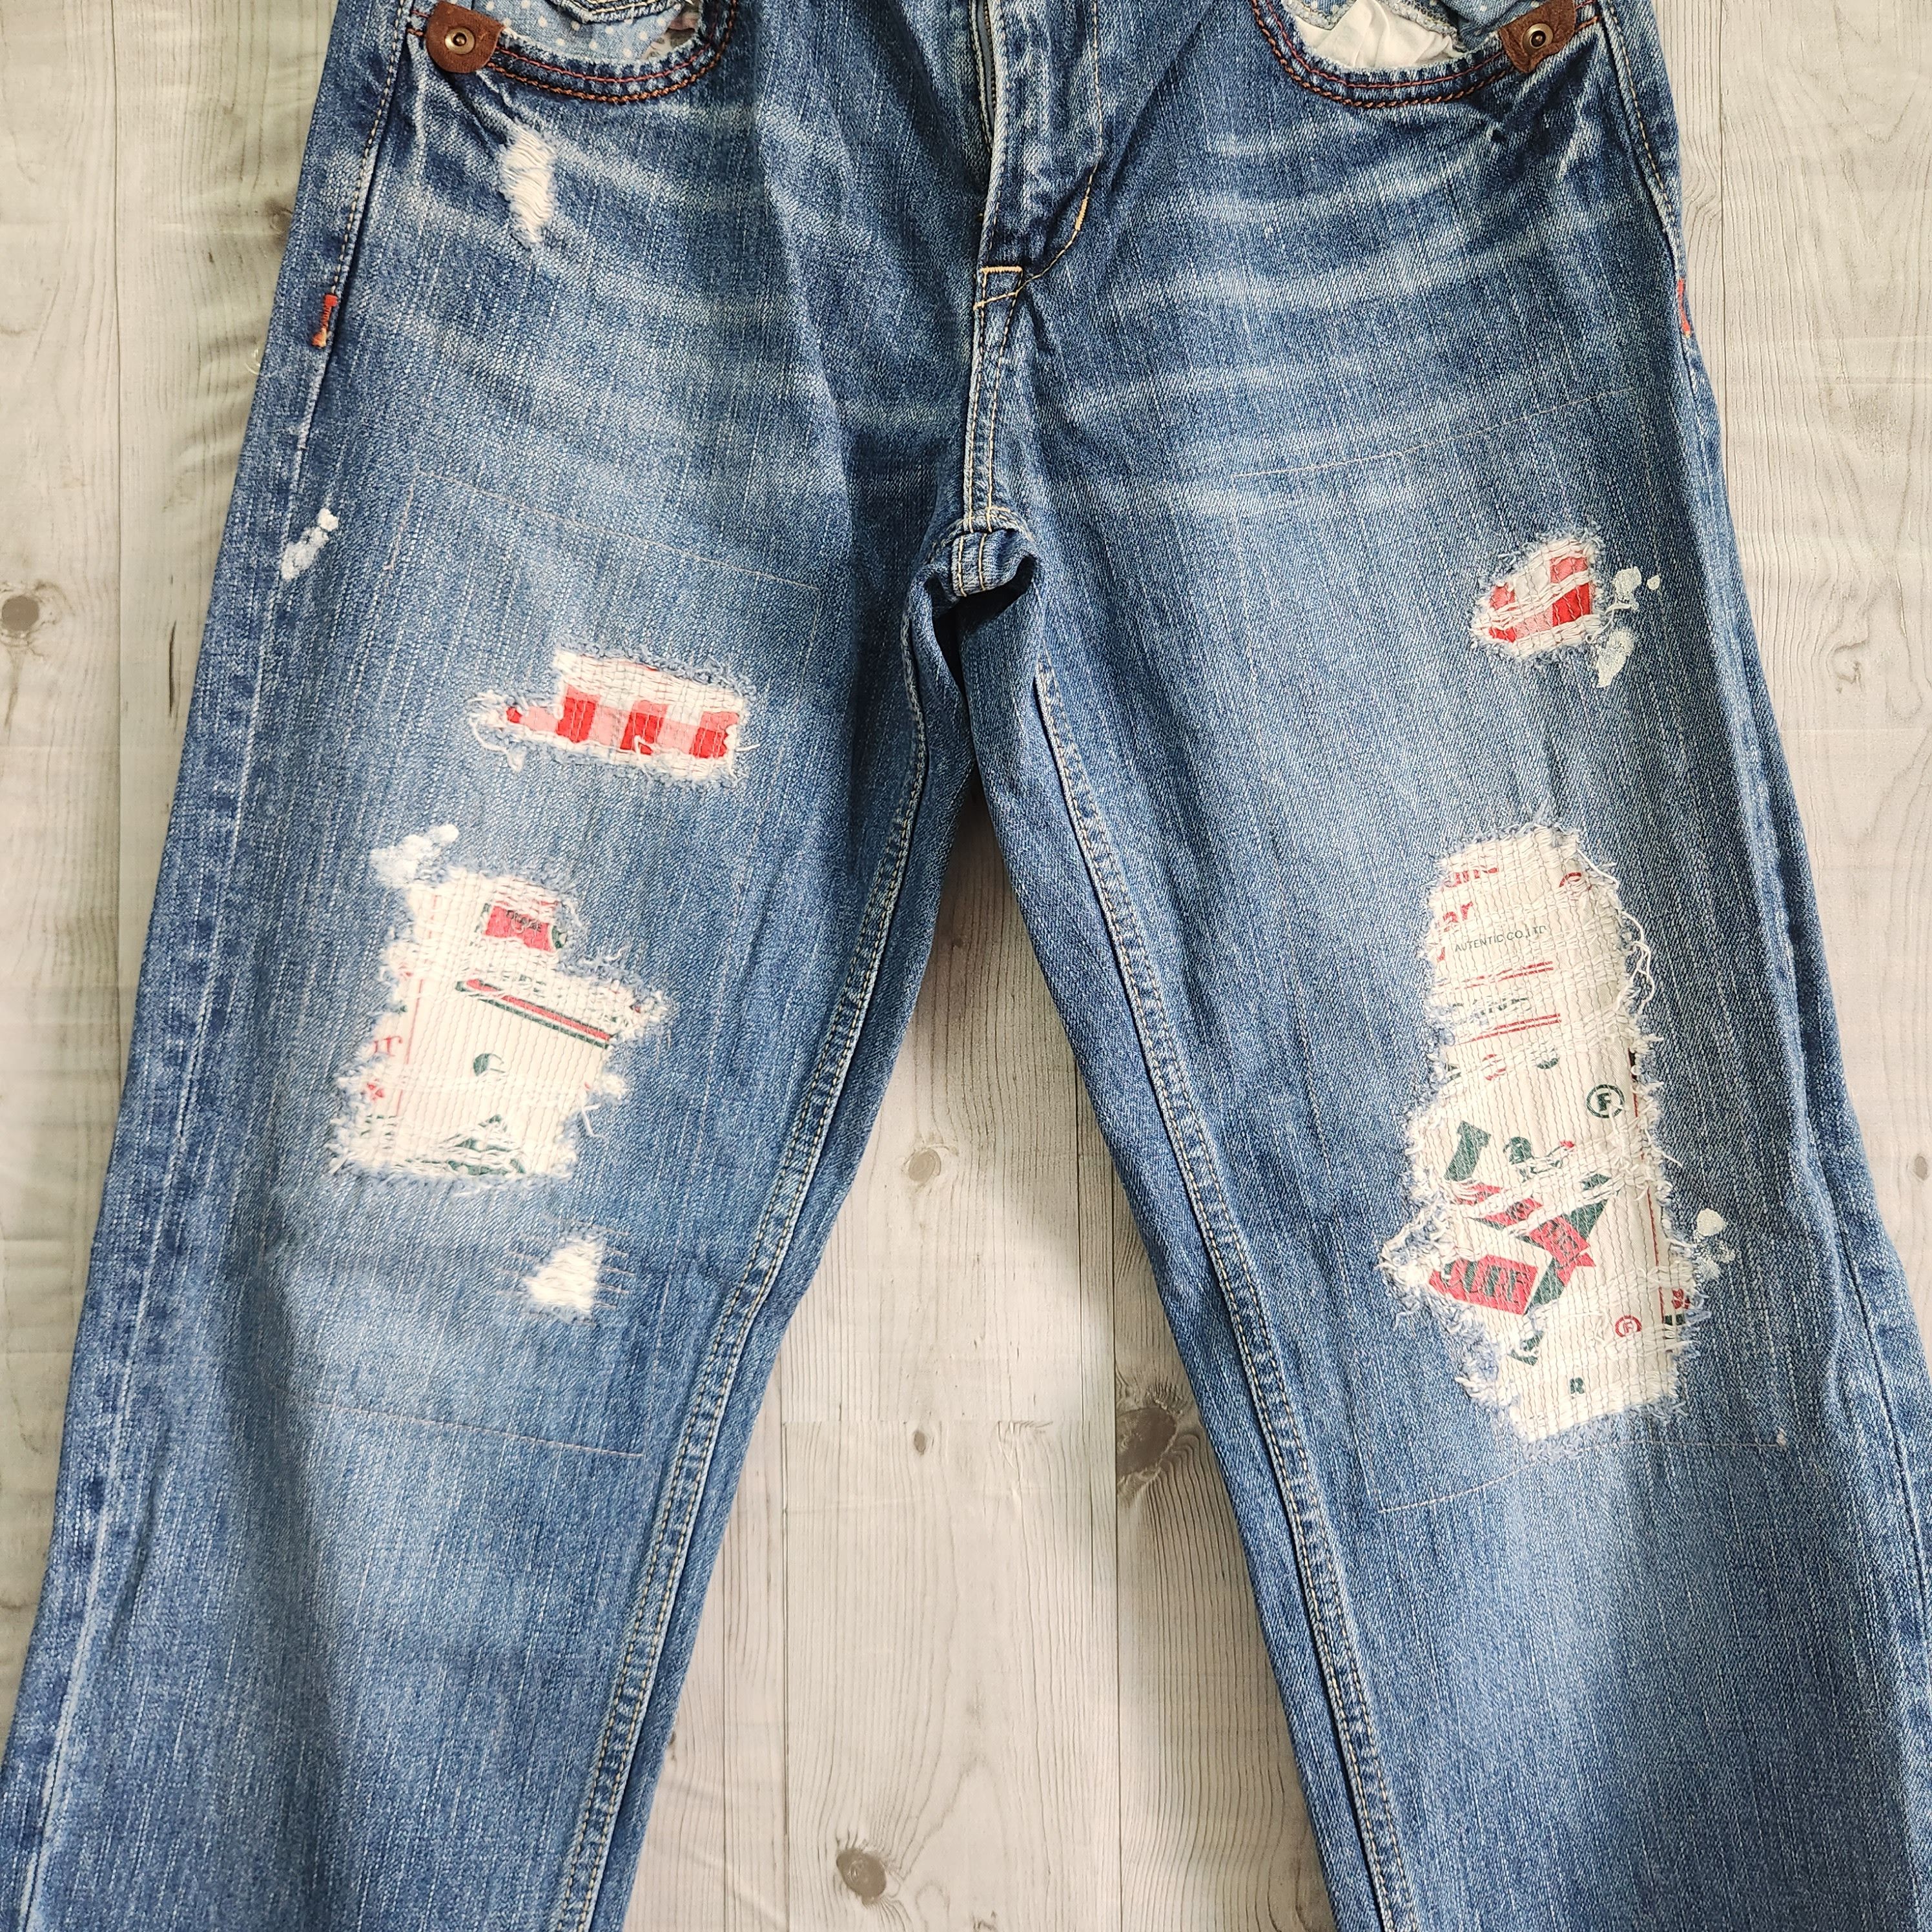 Distressed Denim - Distressed Sashiko Denim Cube Sugar Japanese Jeans - 9